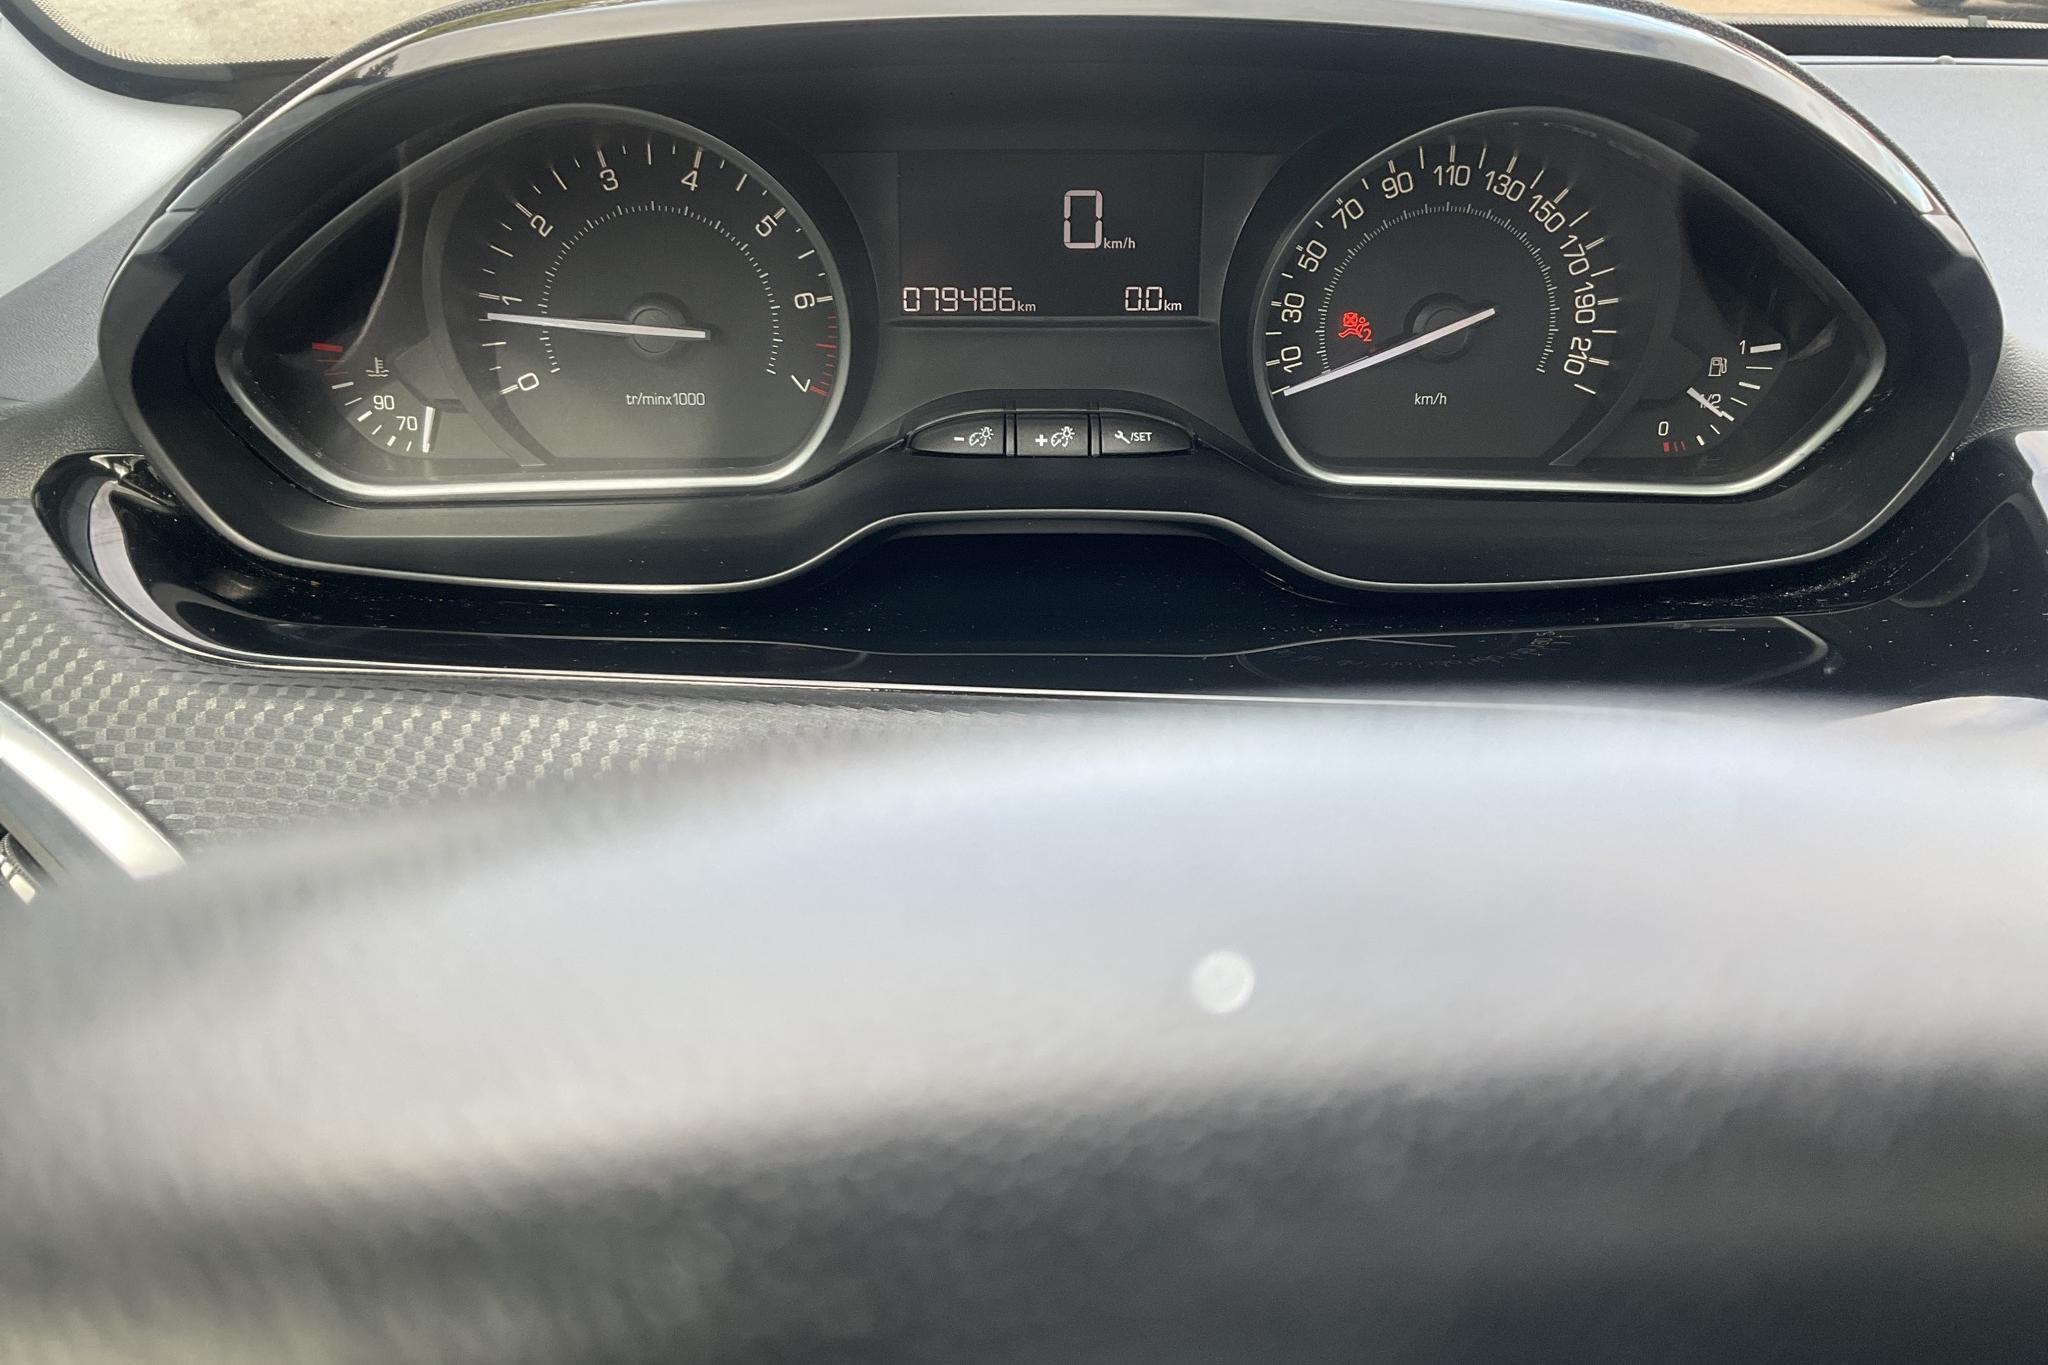 Peugeot 208 PureTech 5dr (82hk) - 79 490 km - Manual - 2018